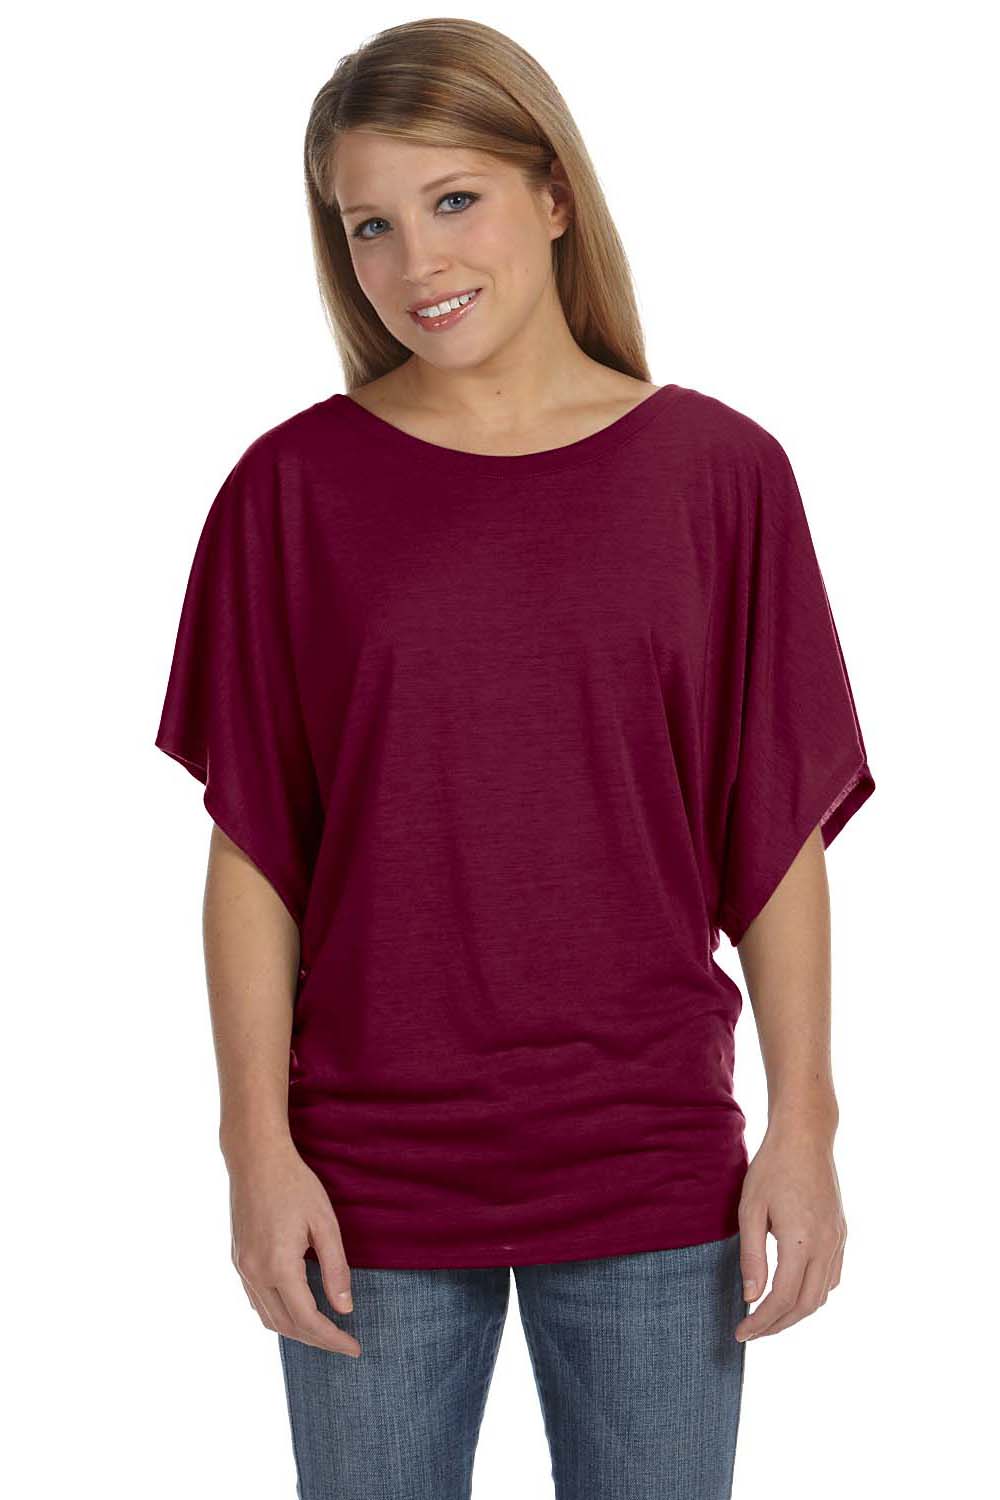 Bella + Canvas 8821 Womens Flowy Draped Dolman Short Sleeve Wide Neck T-Shirt Maroon Front